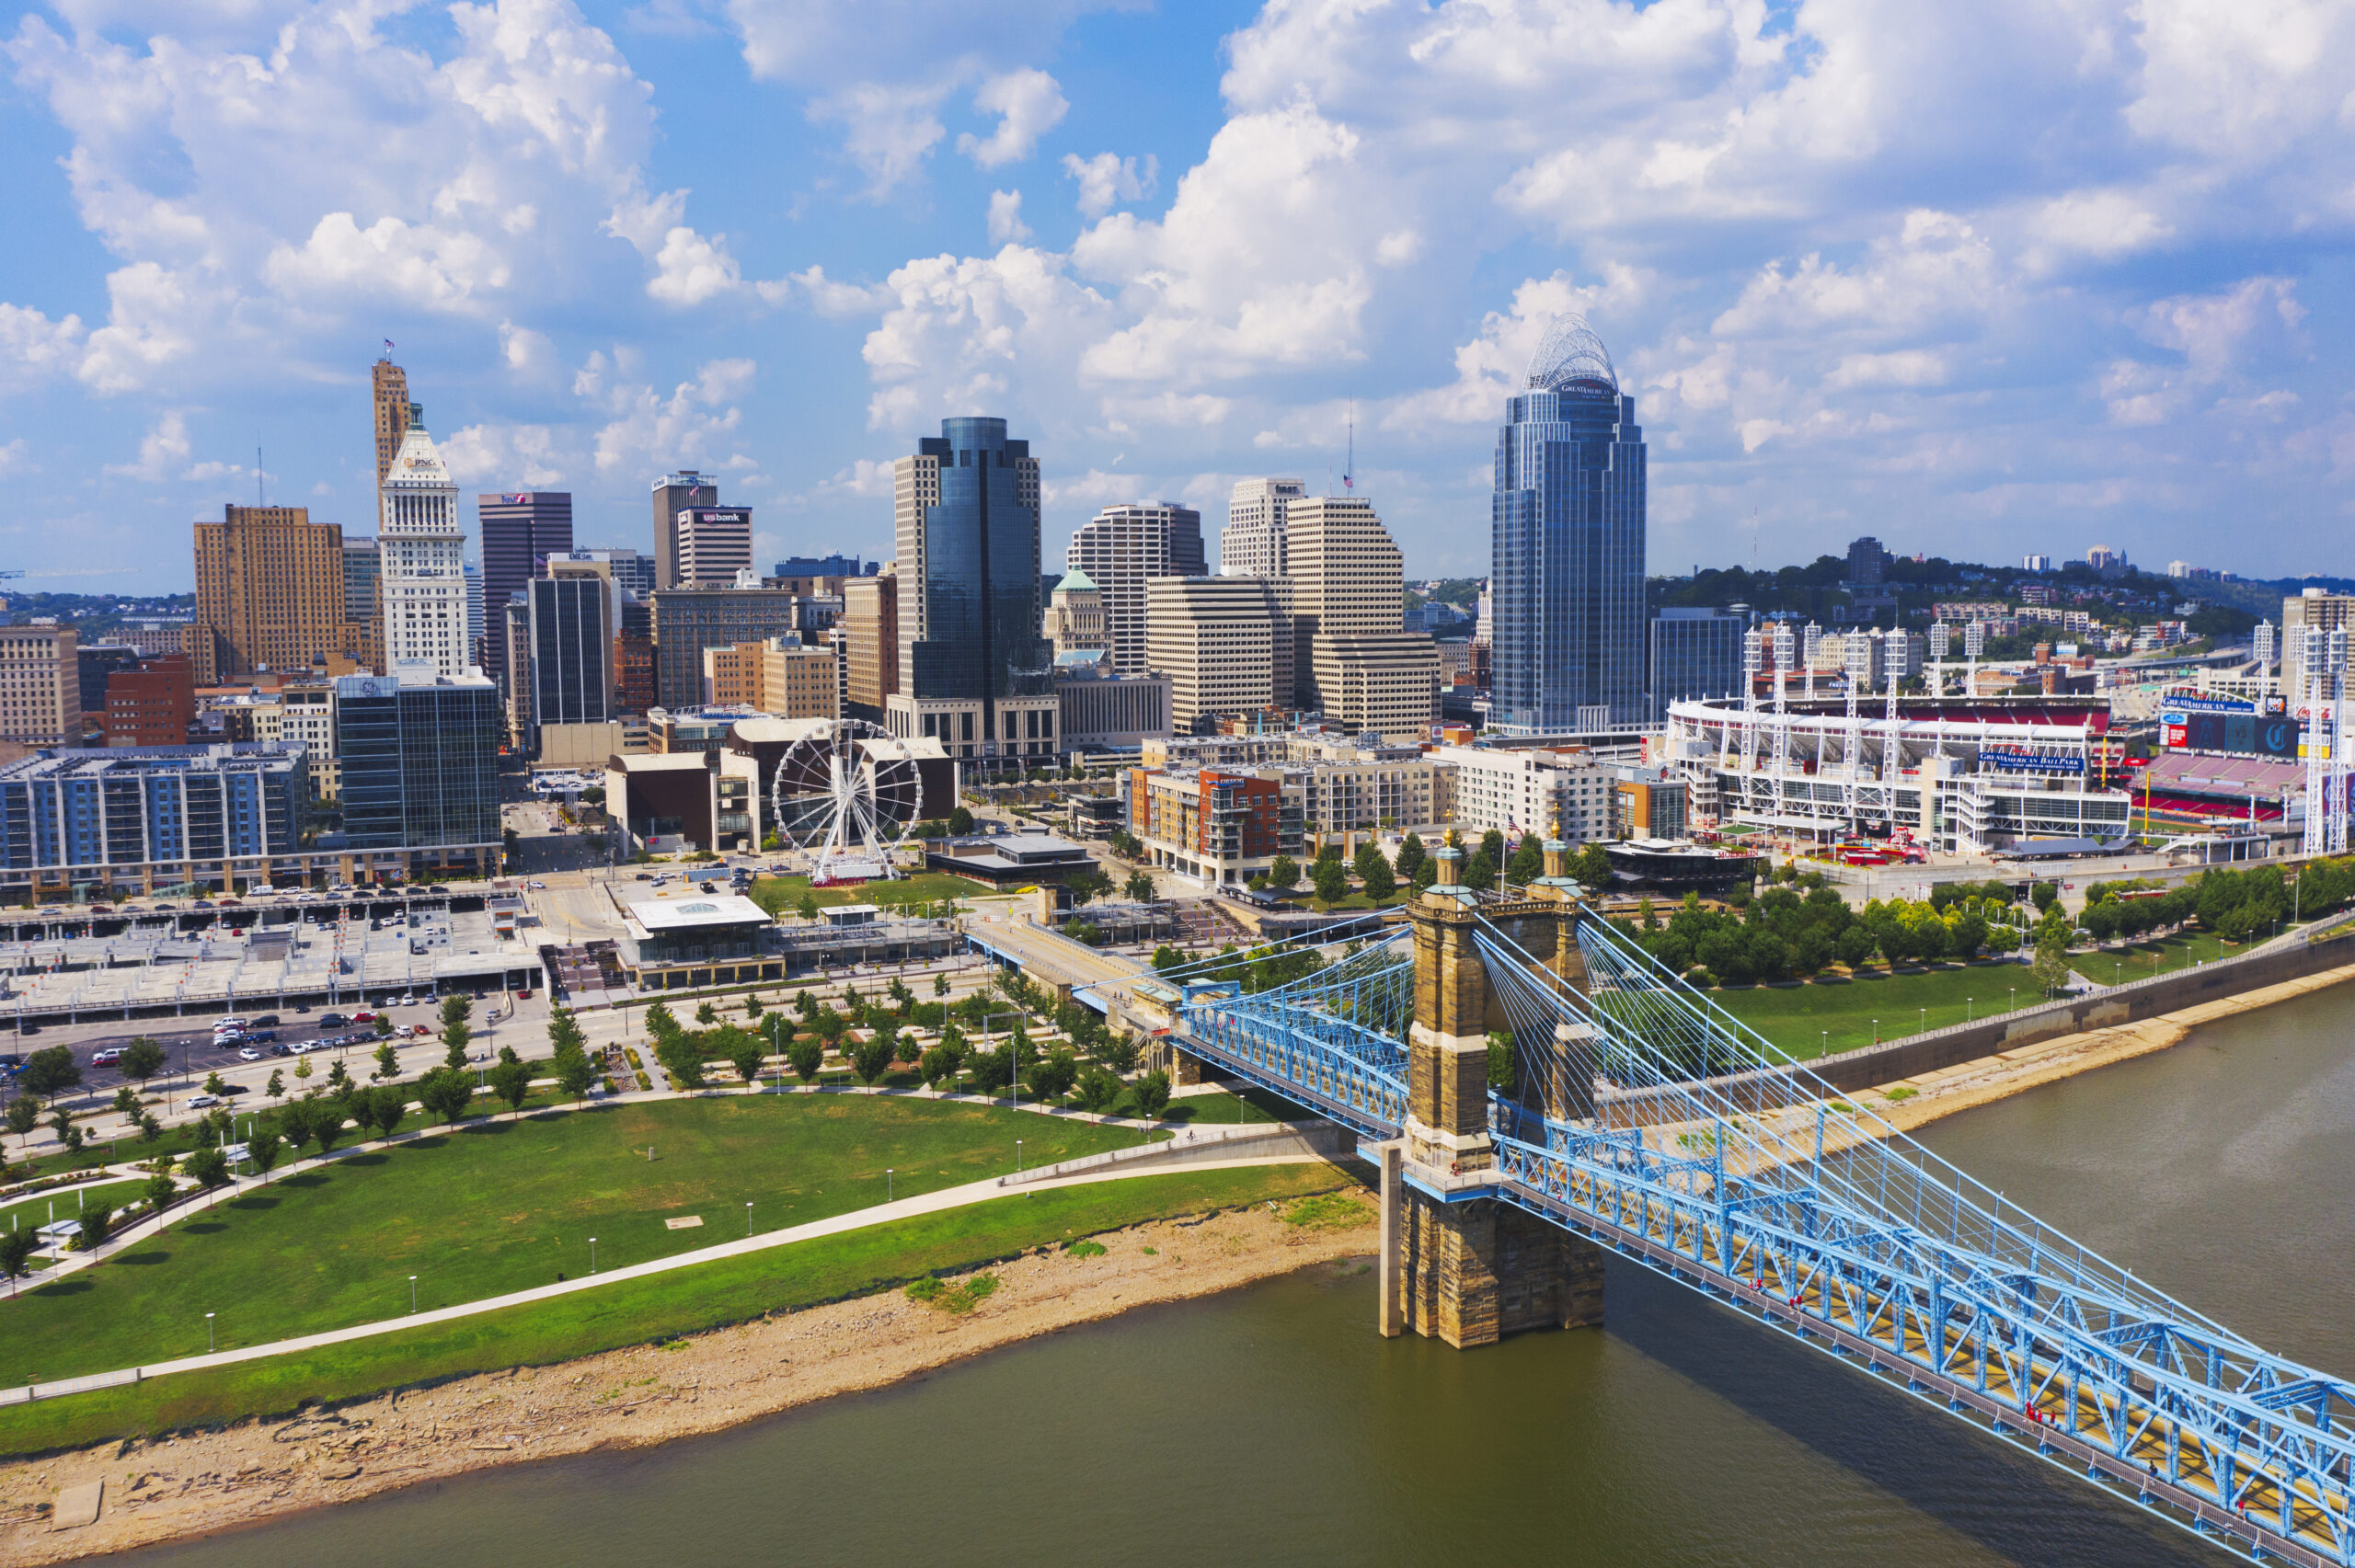 Cincinnati skyline aerial view with Ohio river